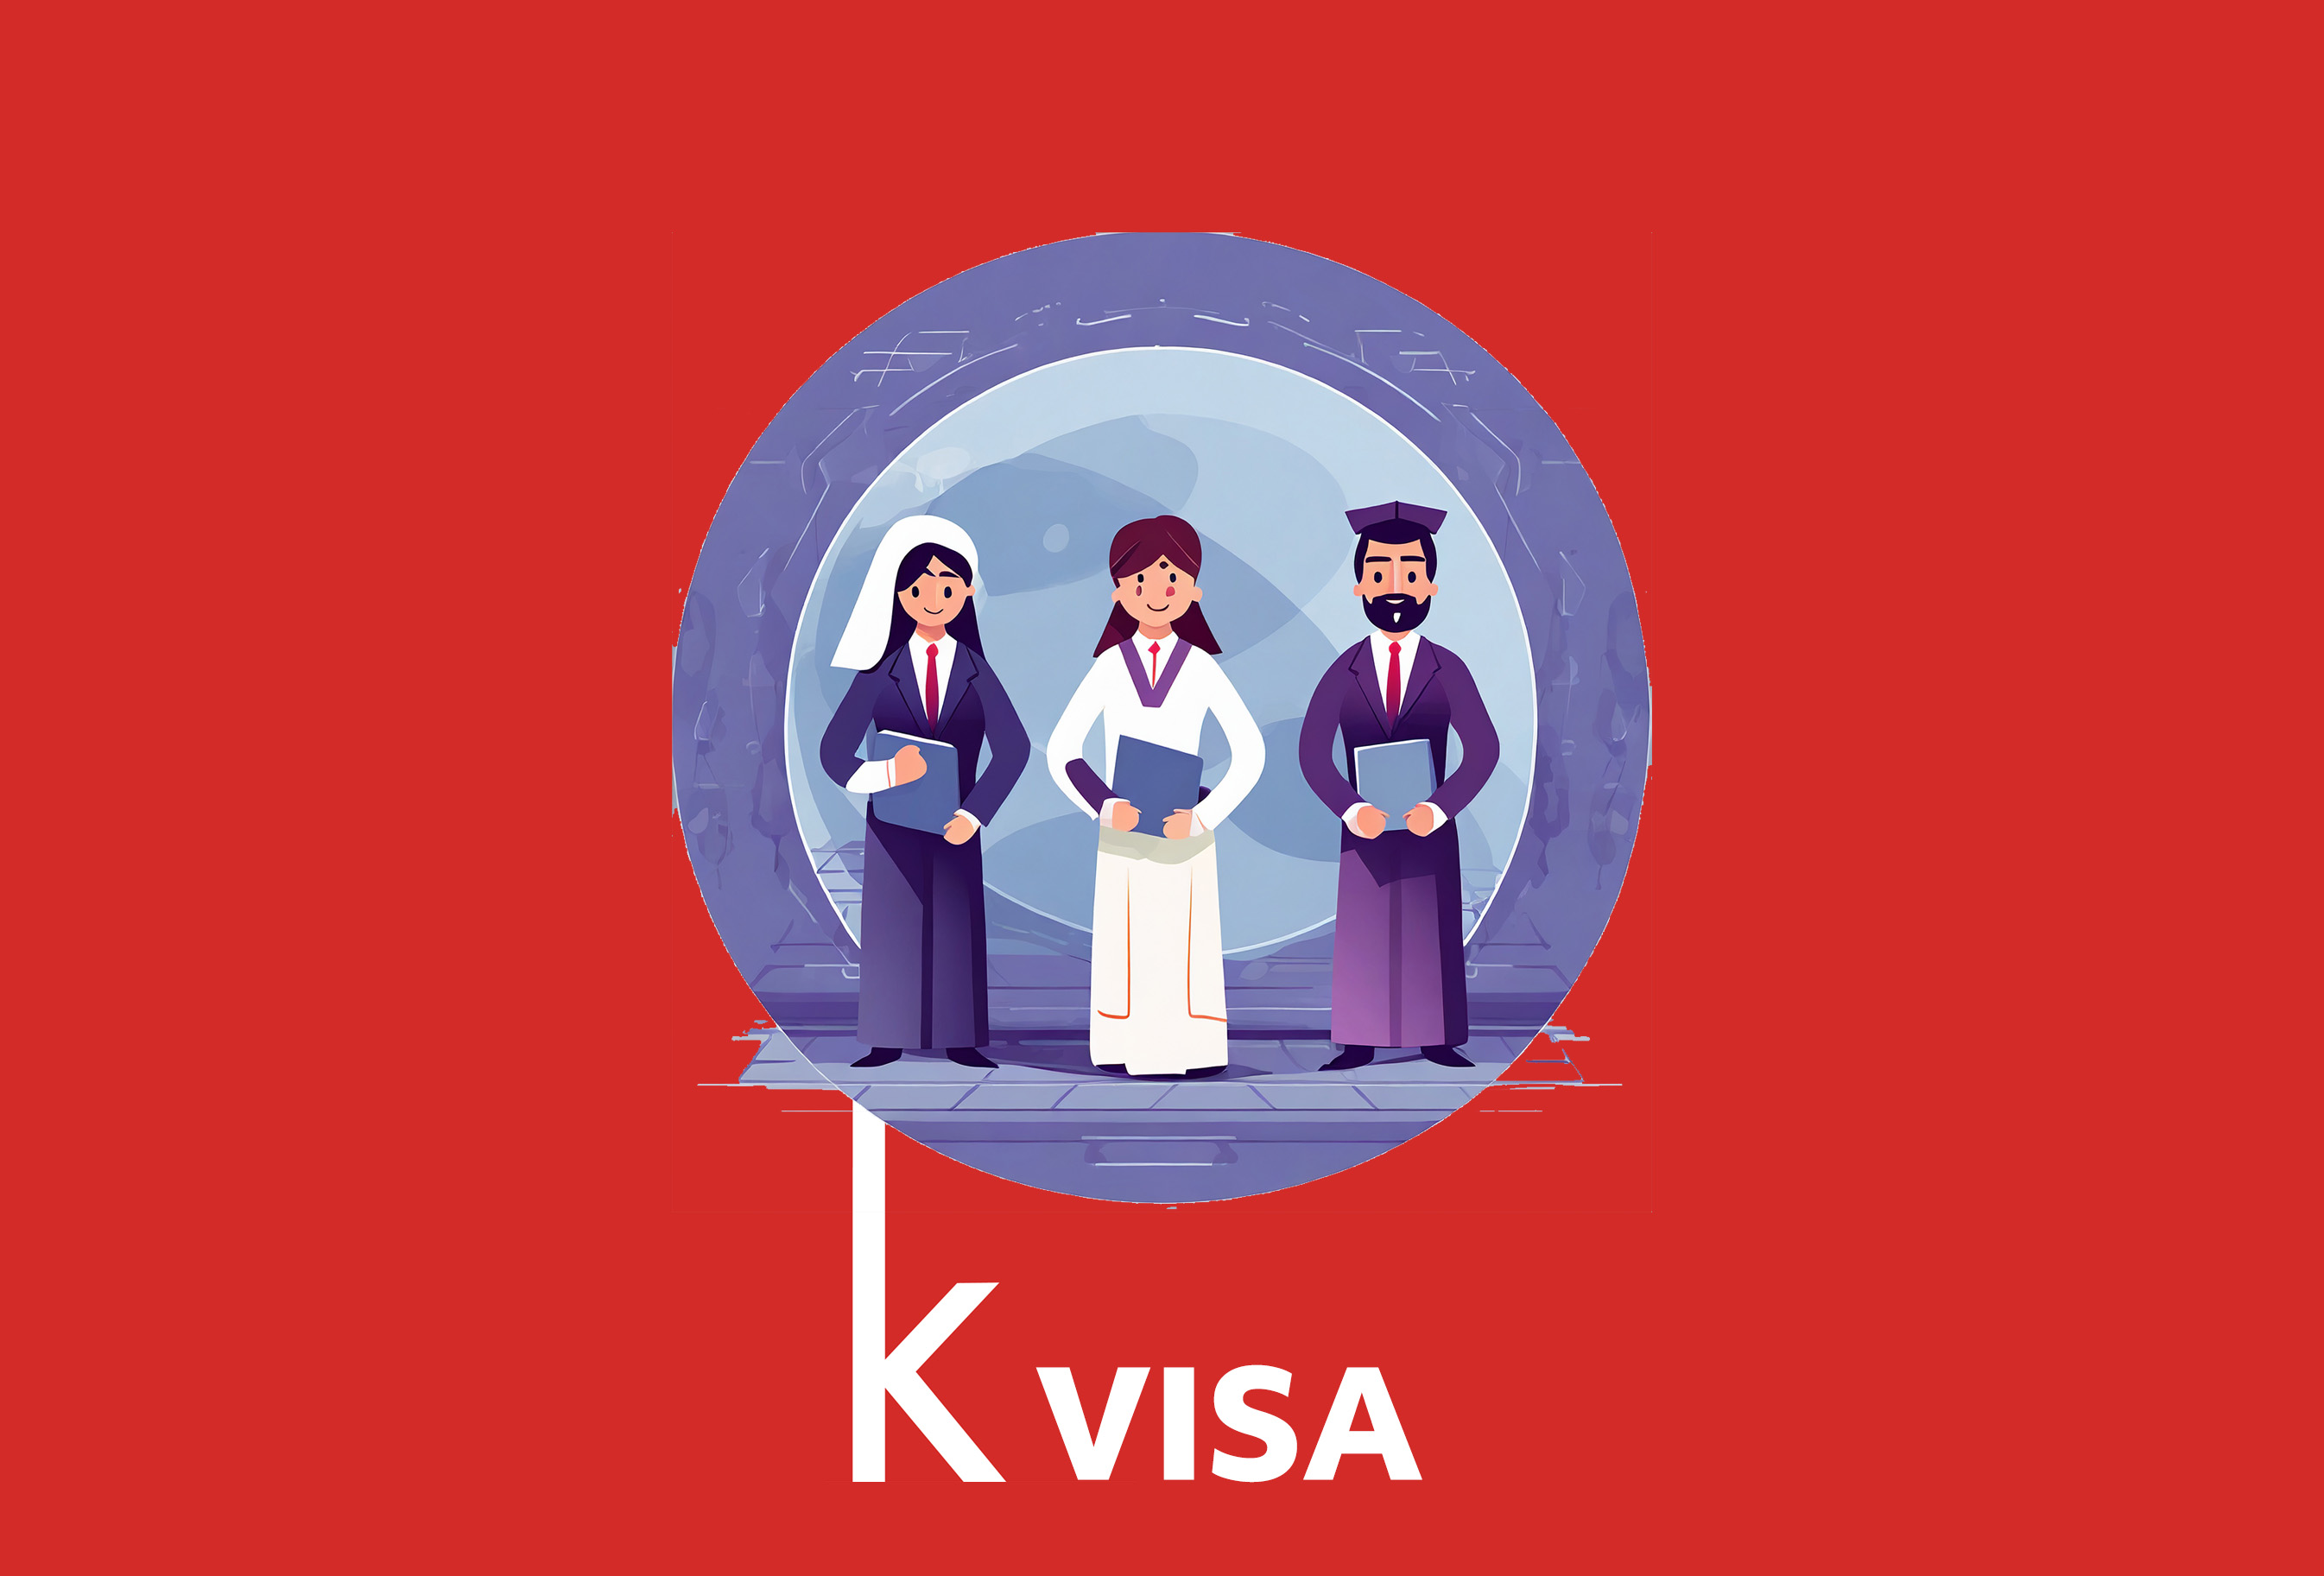 D-6 Visa profile.jpg